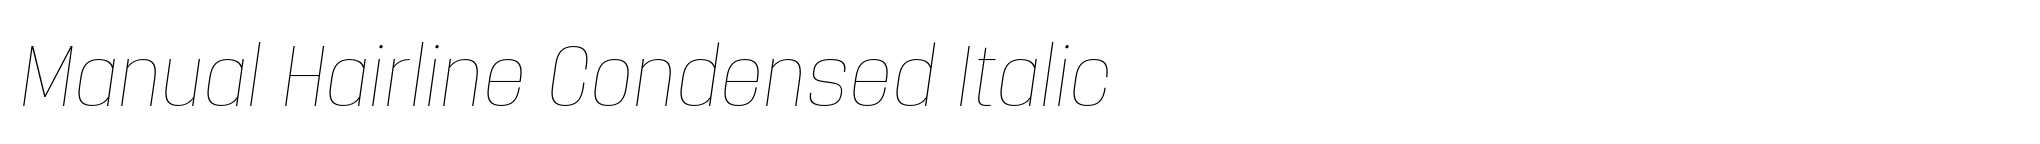 Manual Hairline Condensed Italic image